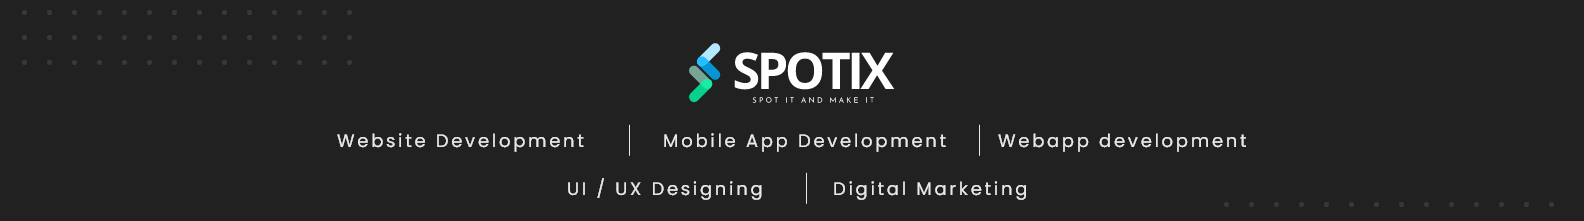 Spotix Pvt Ltd's profile banner